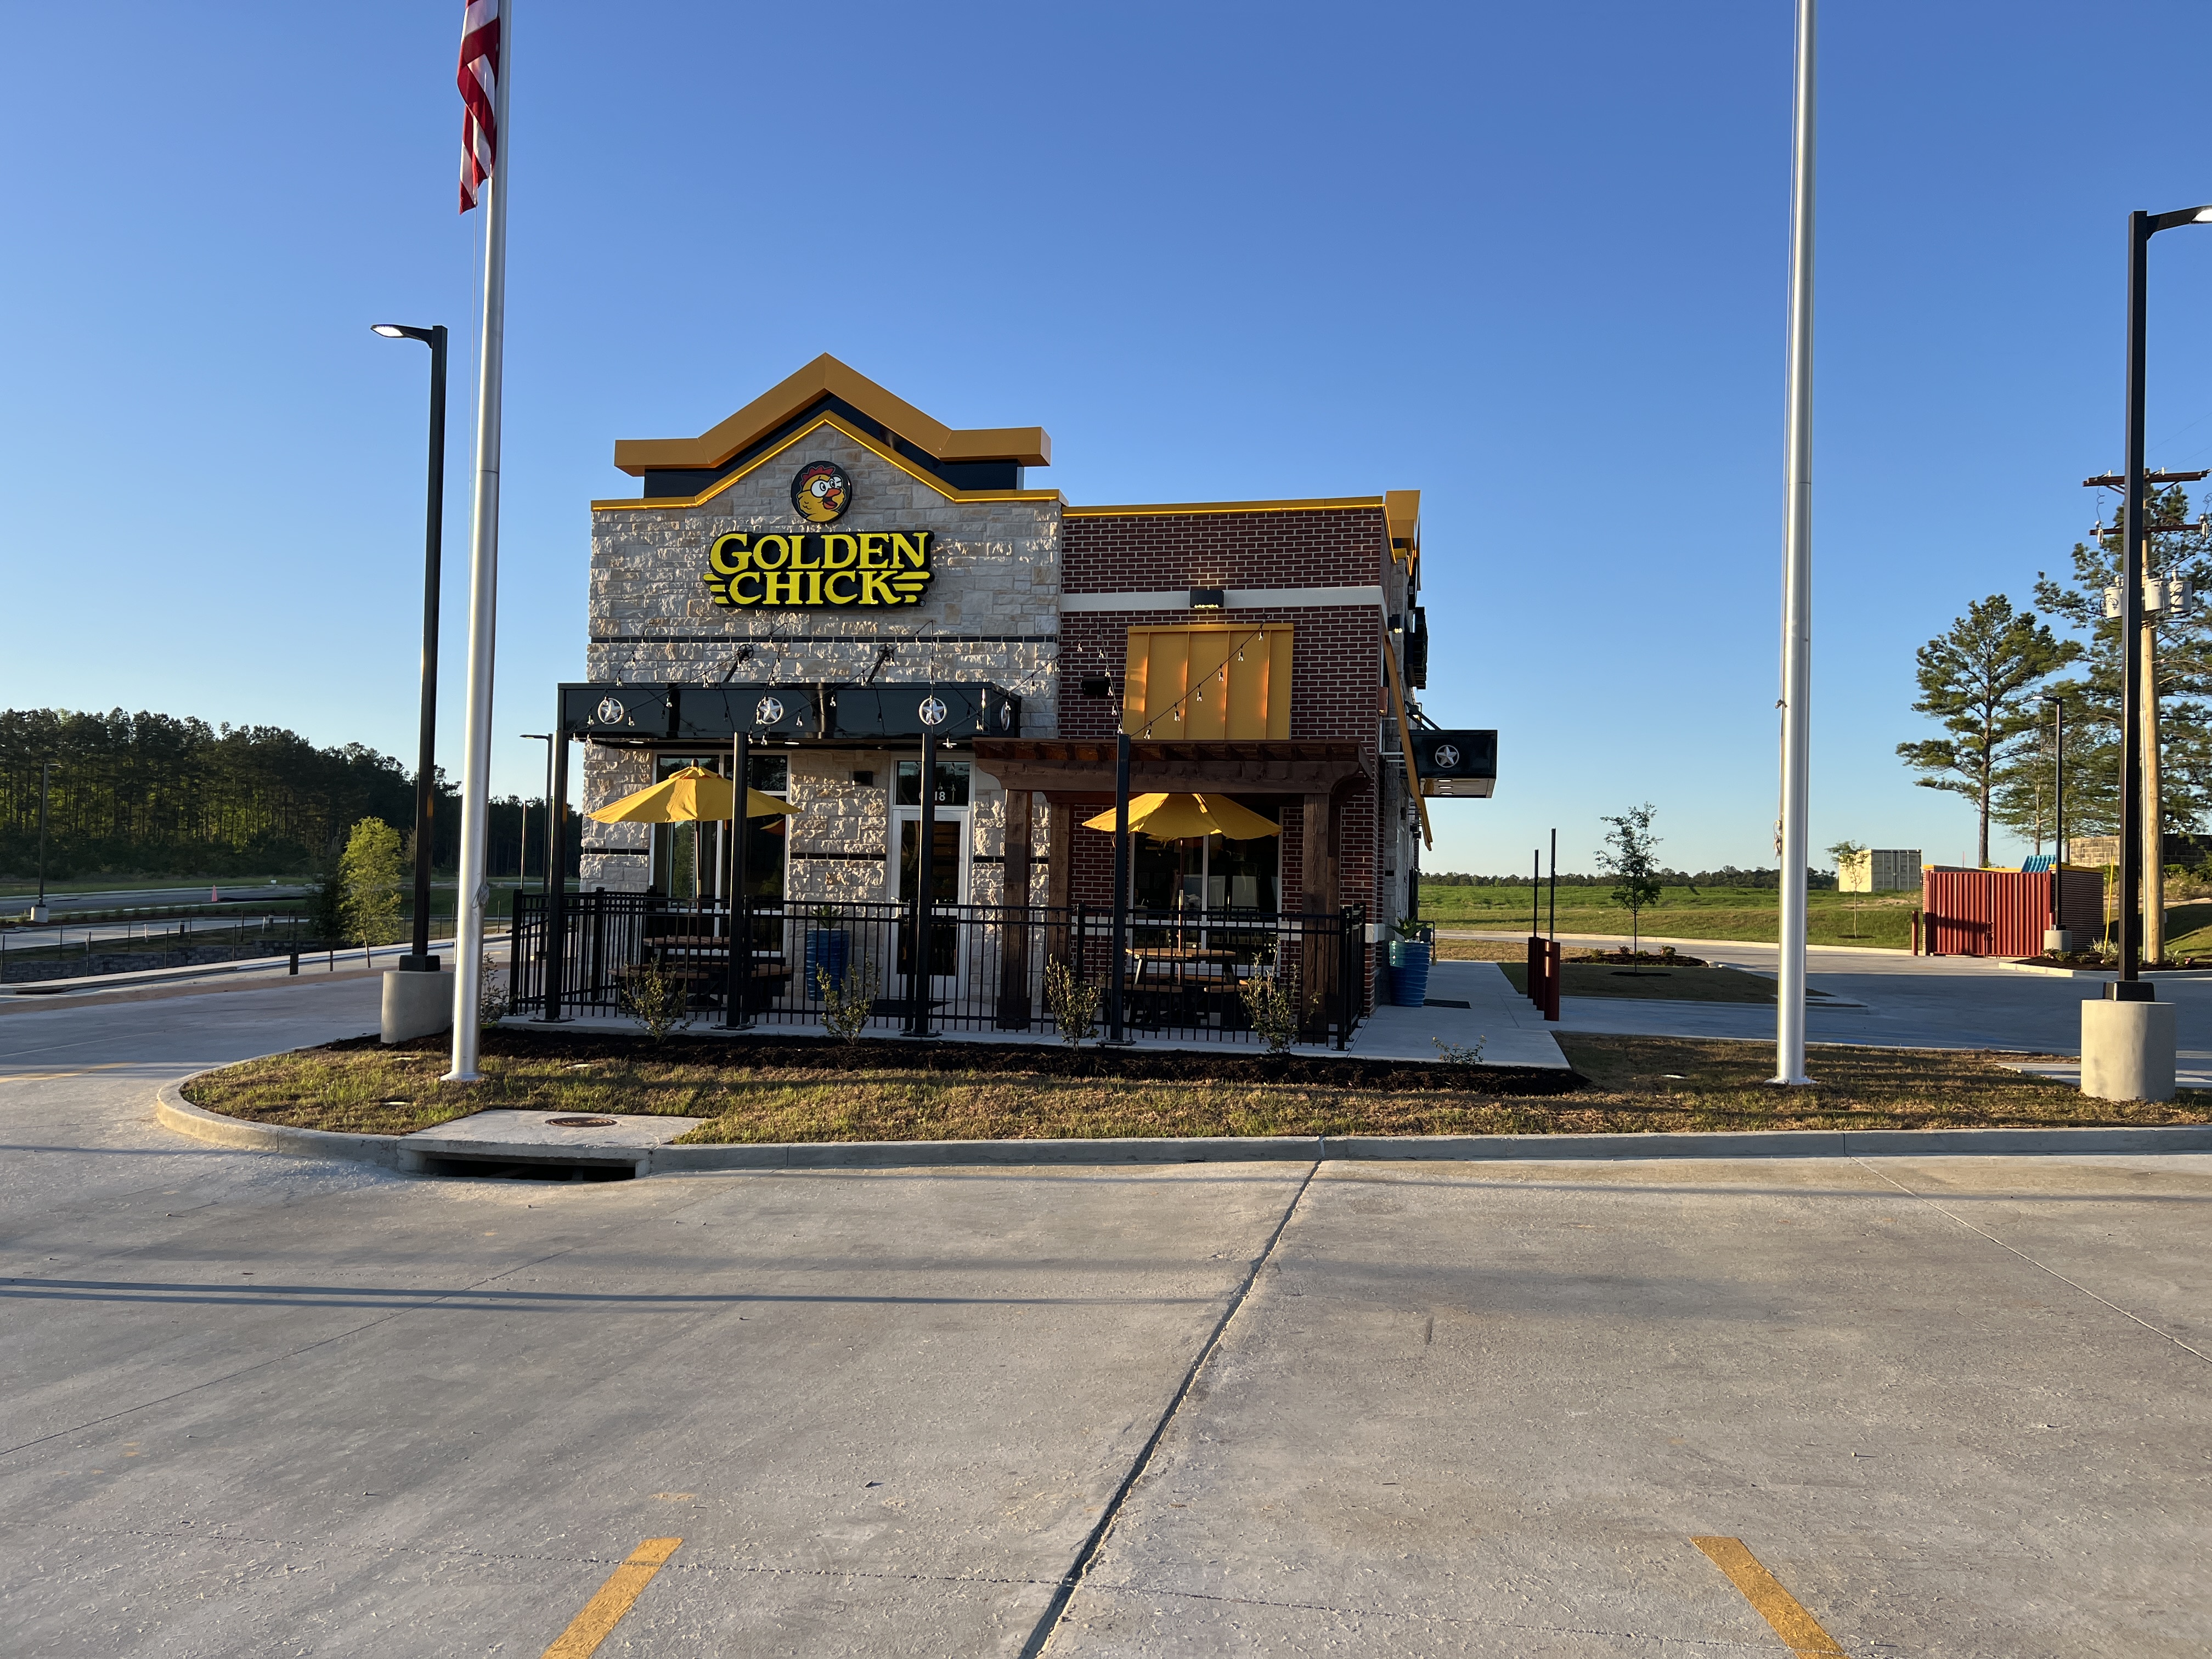 Golden Chick storefront.  Your local Golden Chick fast food restaurant in Hattiesburg, Mississippi